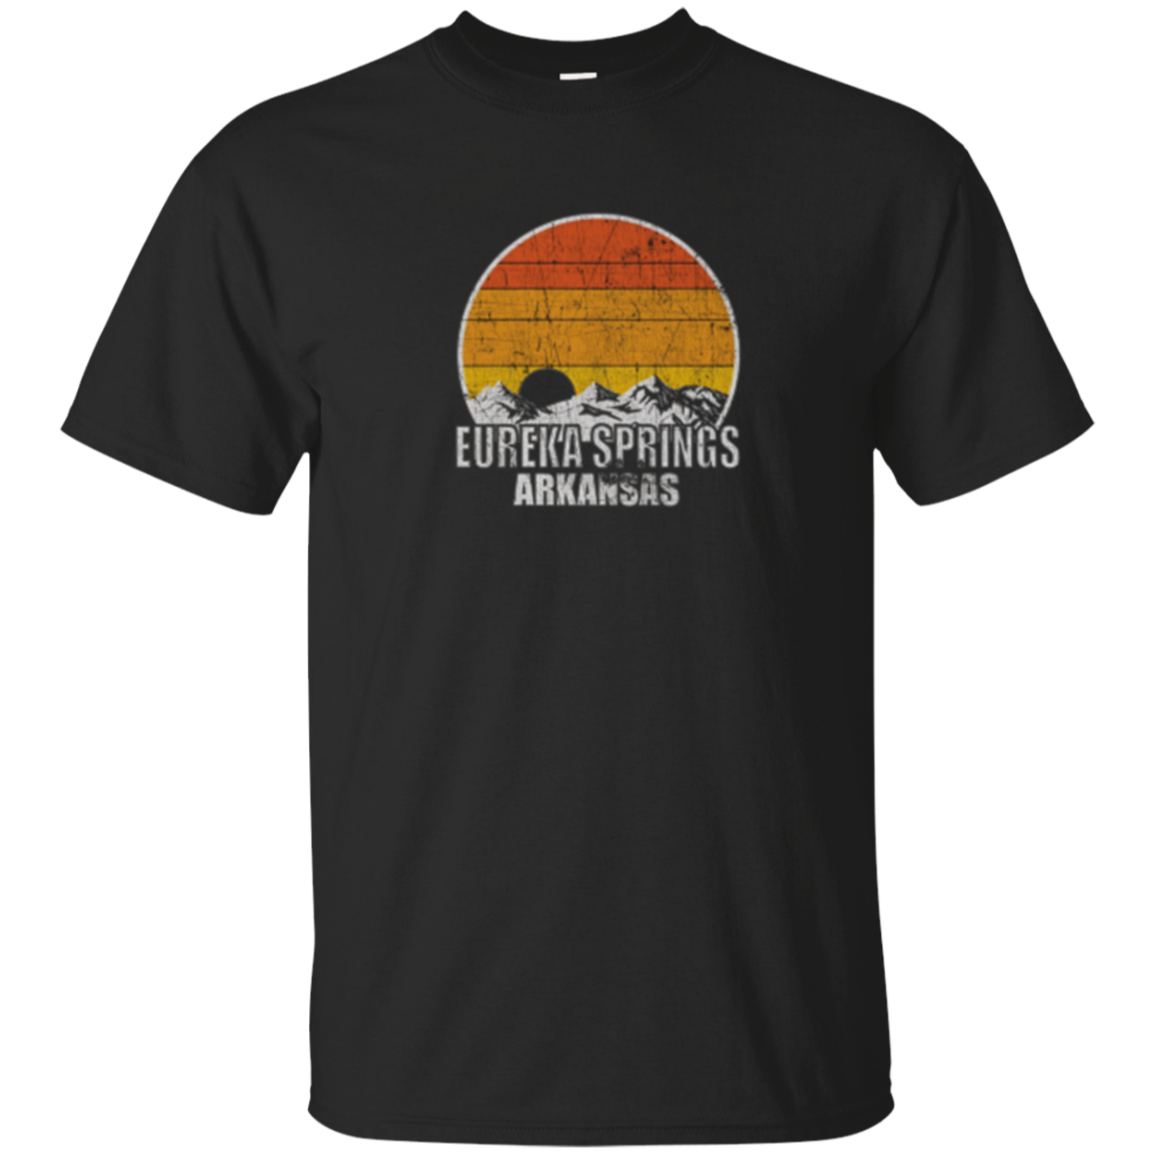 Retro Eureka Springs Arkansas T-shirt